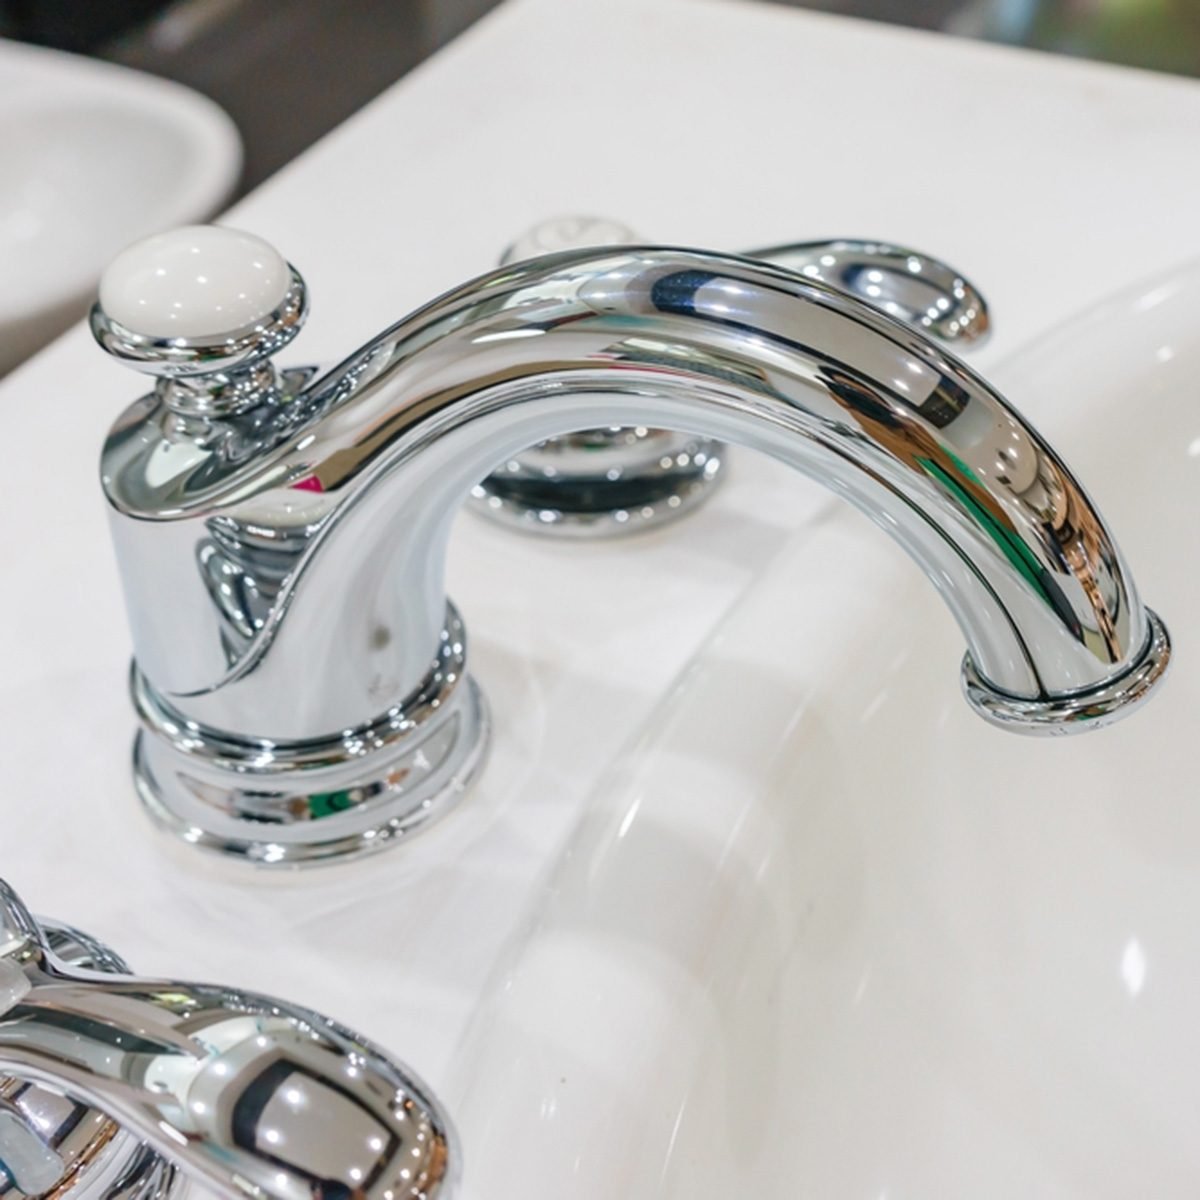 Chrome bathroom faucet. Bathroom water tap. Modern faucet. Bathroom interior. Modern design. Luxury faucet. Modern water tap. Chrome faucet; Shutterstock ID 714816445; Job (TFH, TOH, RD, BNB, CWM, CM): Taste of Home